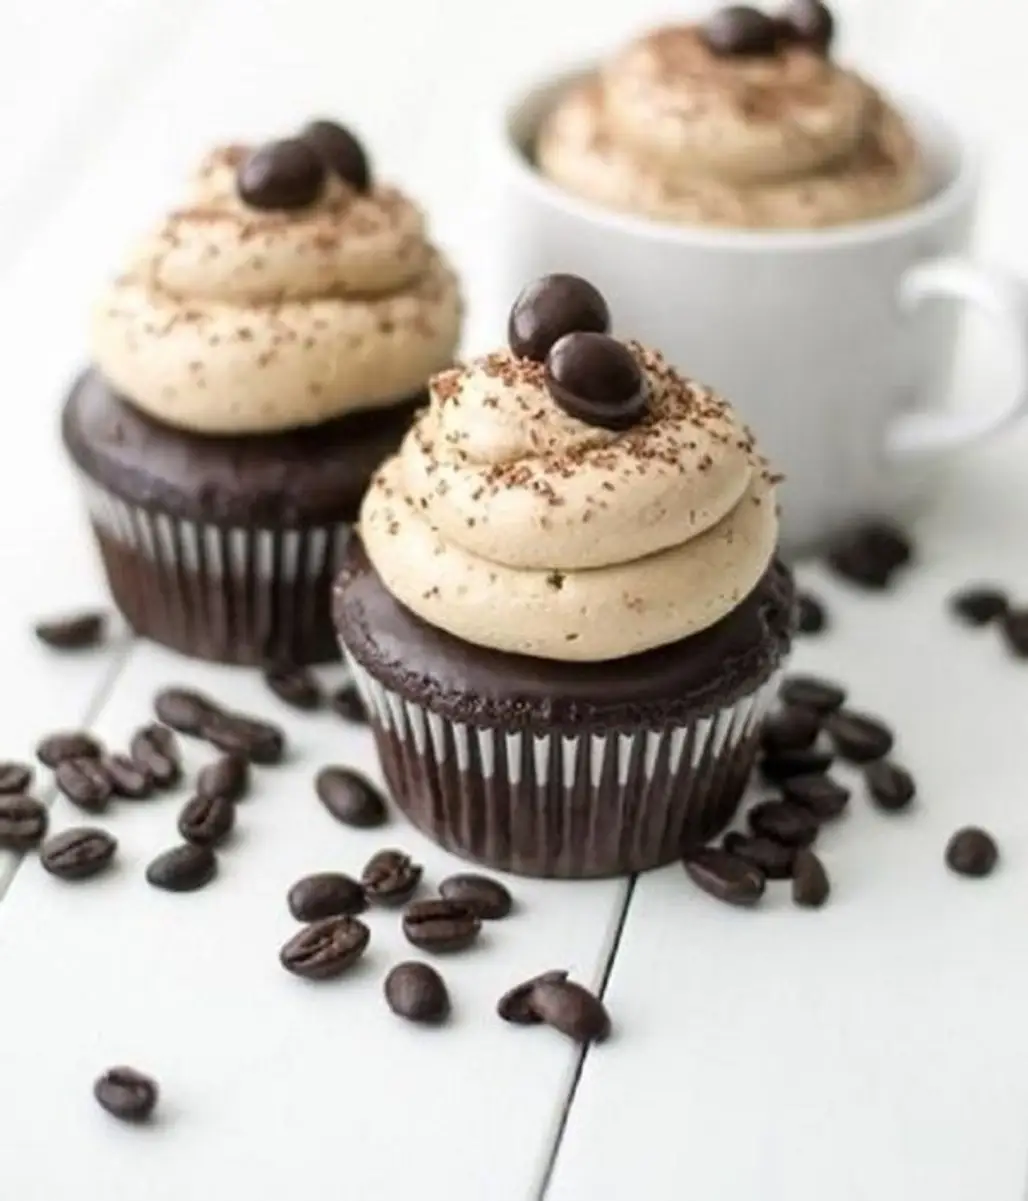 Coffee Cupcakes